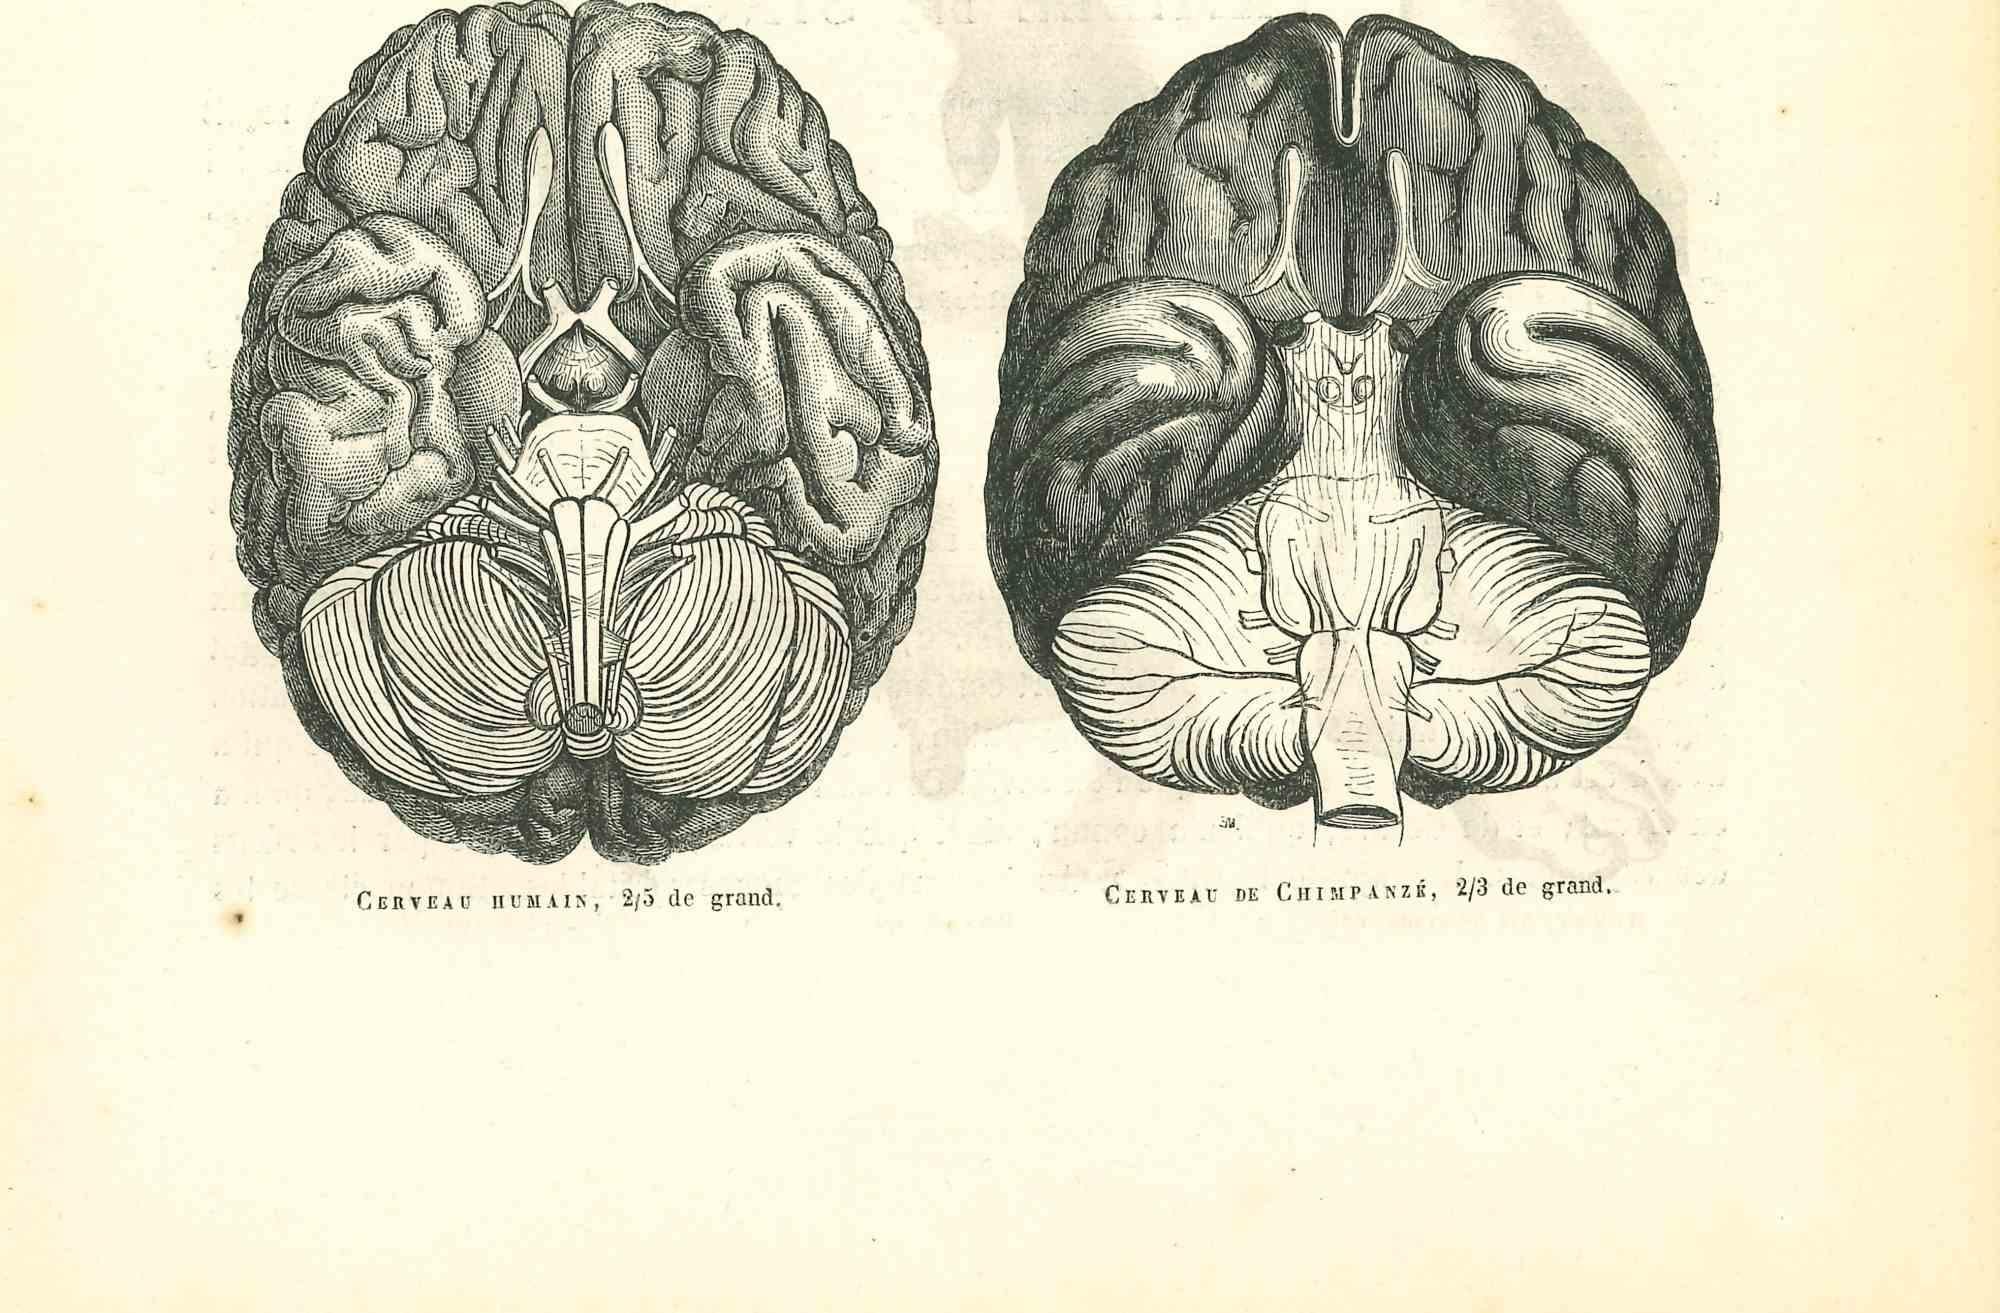 Paul Gervais  Animal Print - Human's Brain VS Brain Of Chimpanzee - Lithograph by P. Gervais - 1854